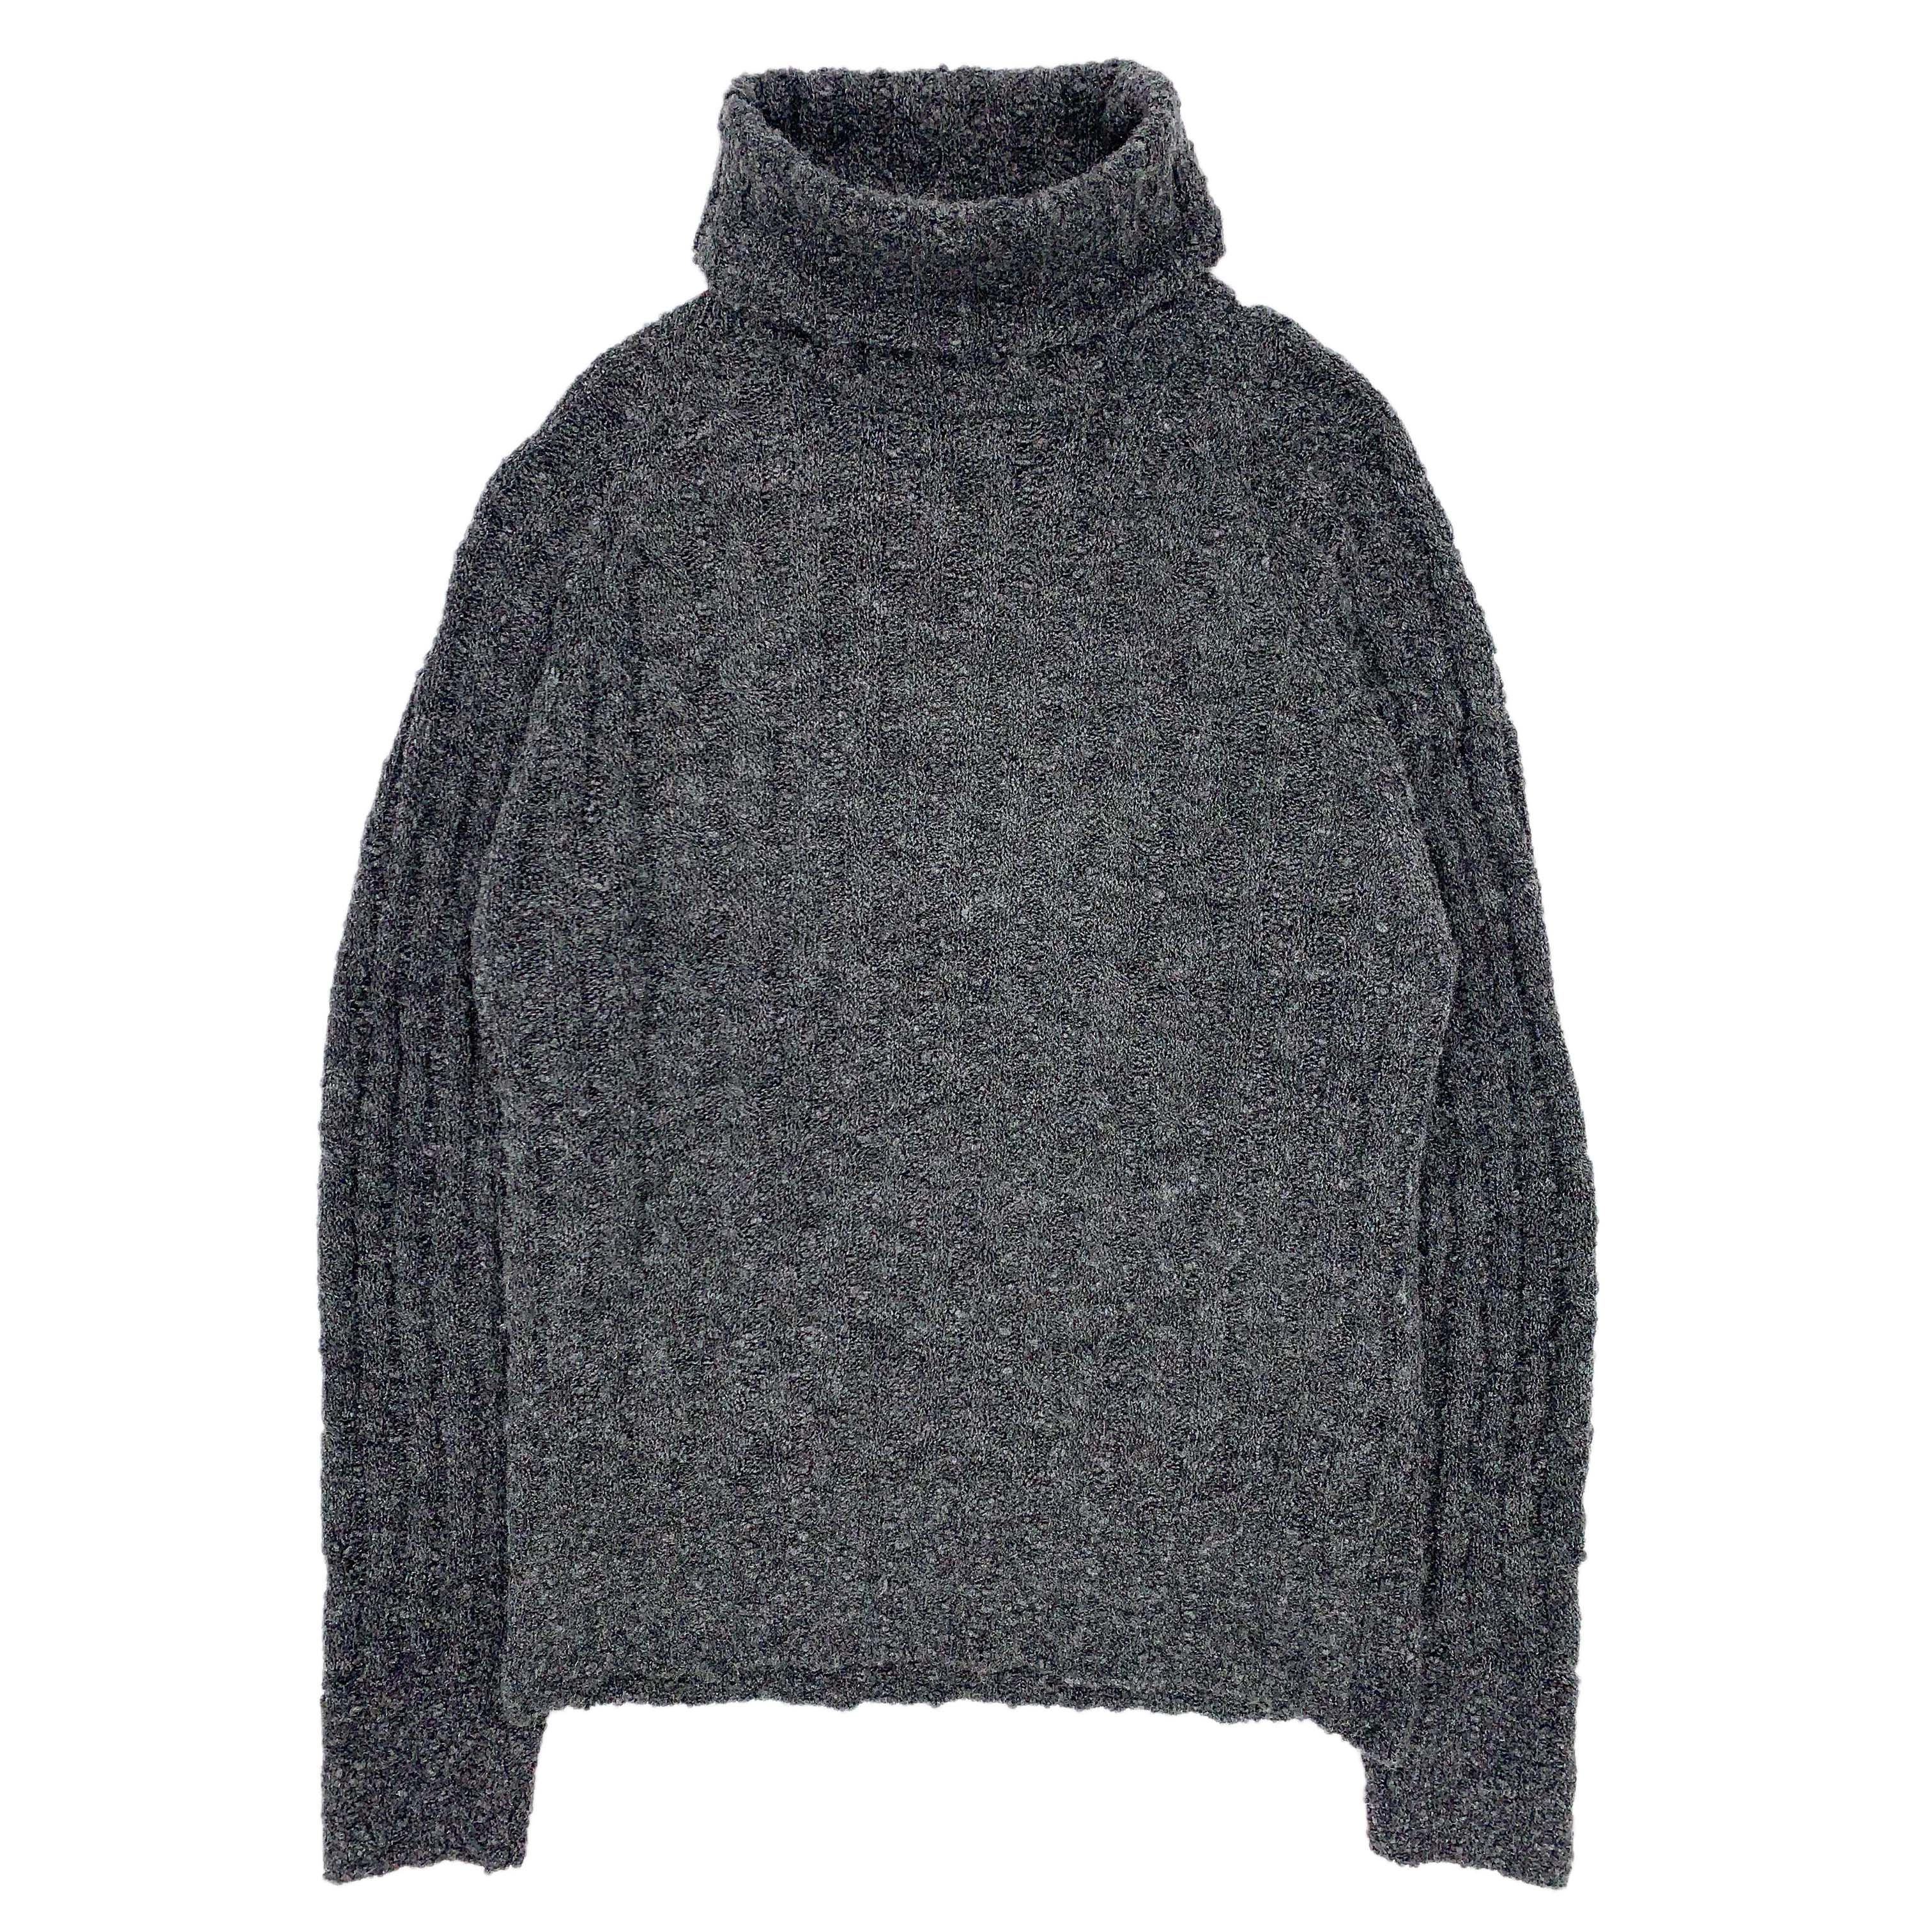 Issey Miyake - AW96 Metallic Knit Acrylic-Nylon Sweater - 1